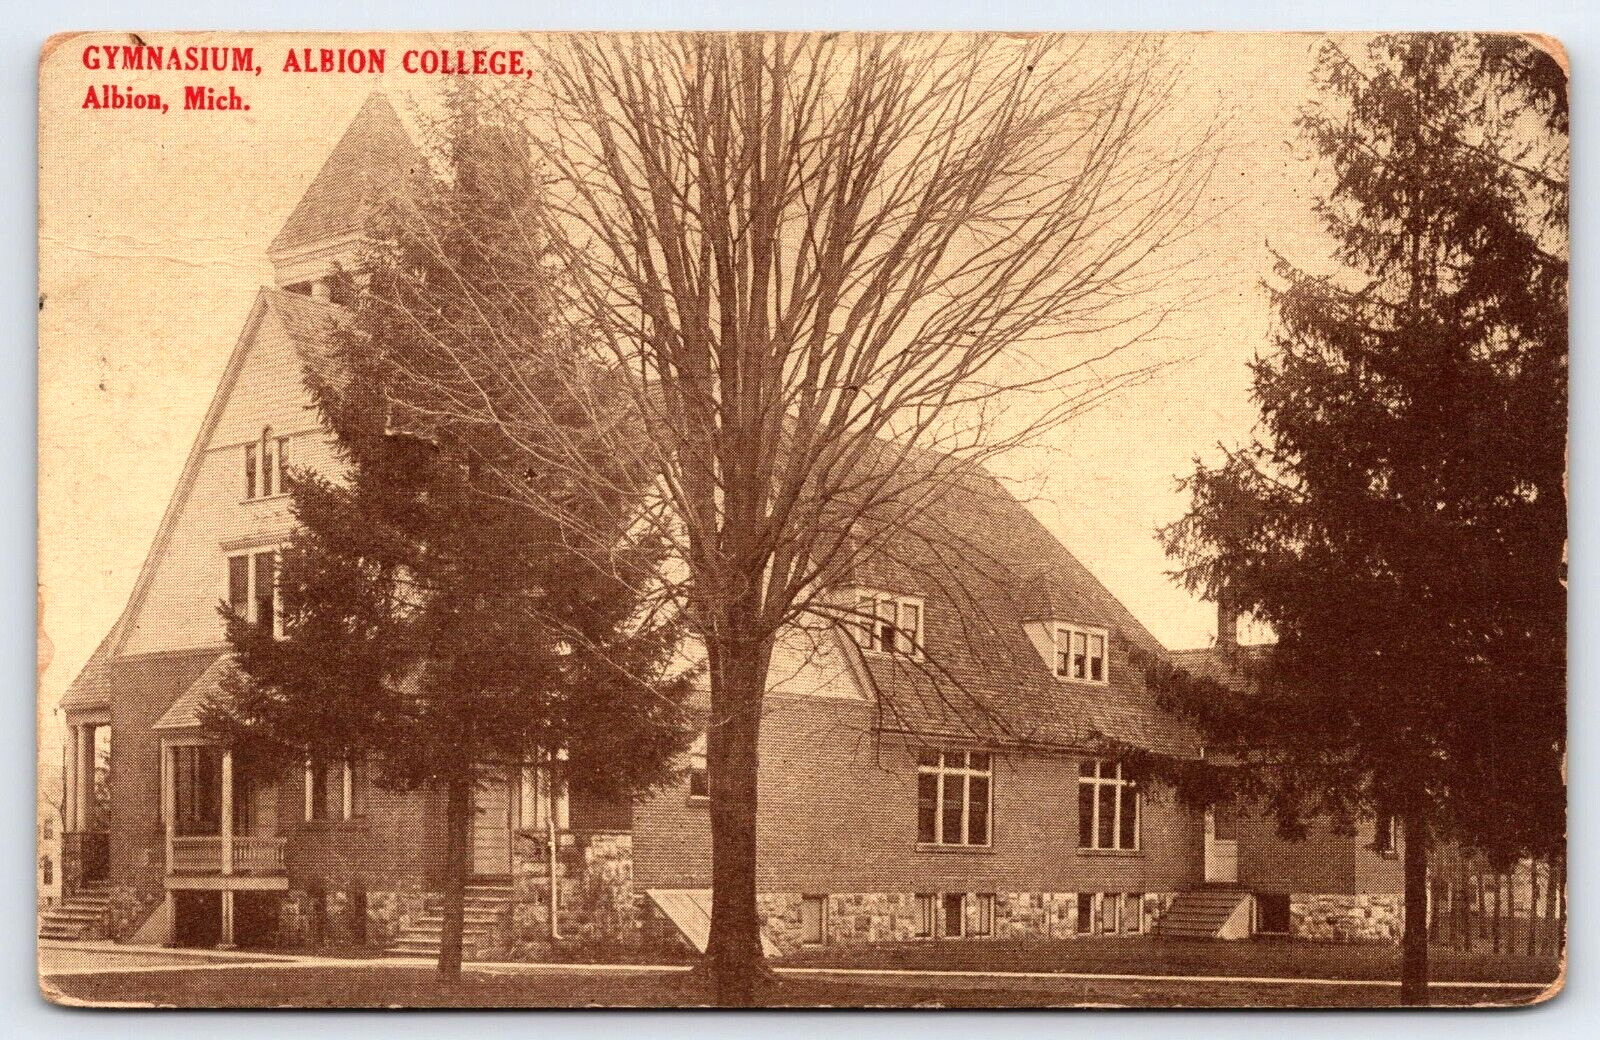 Original Old Vintage Postcard Albion College Gymnasium Albion Michigan USA 1913